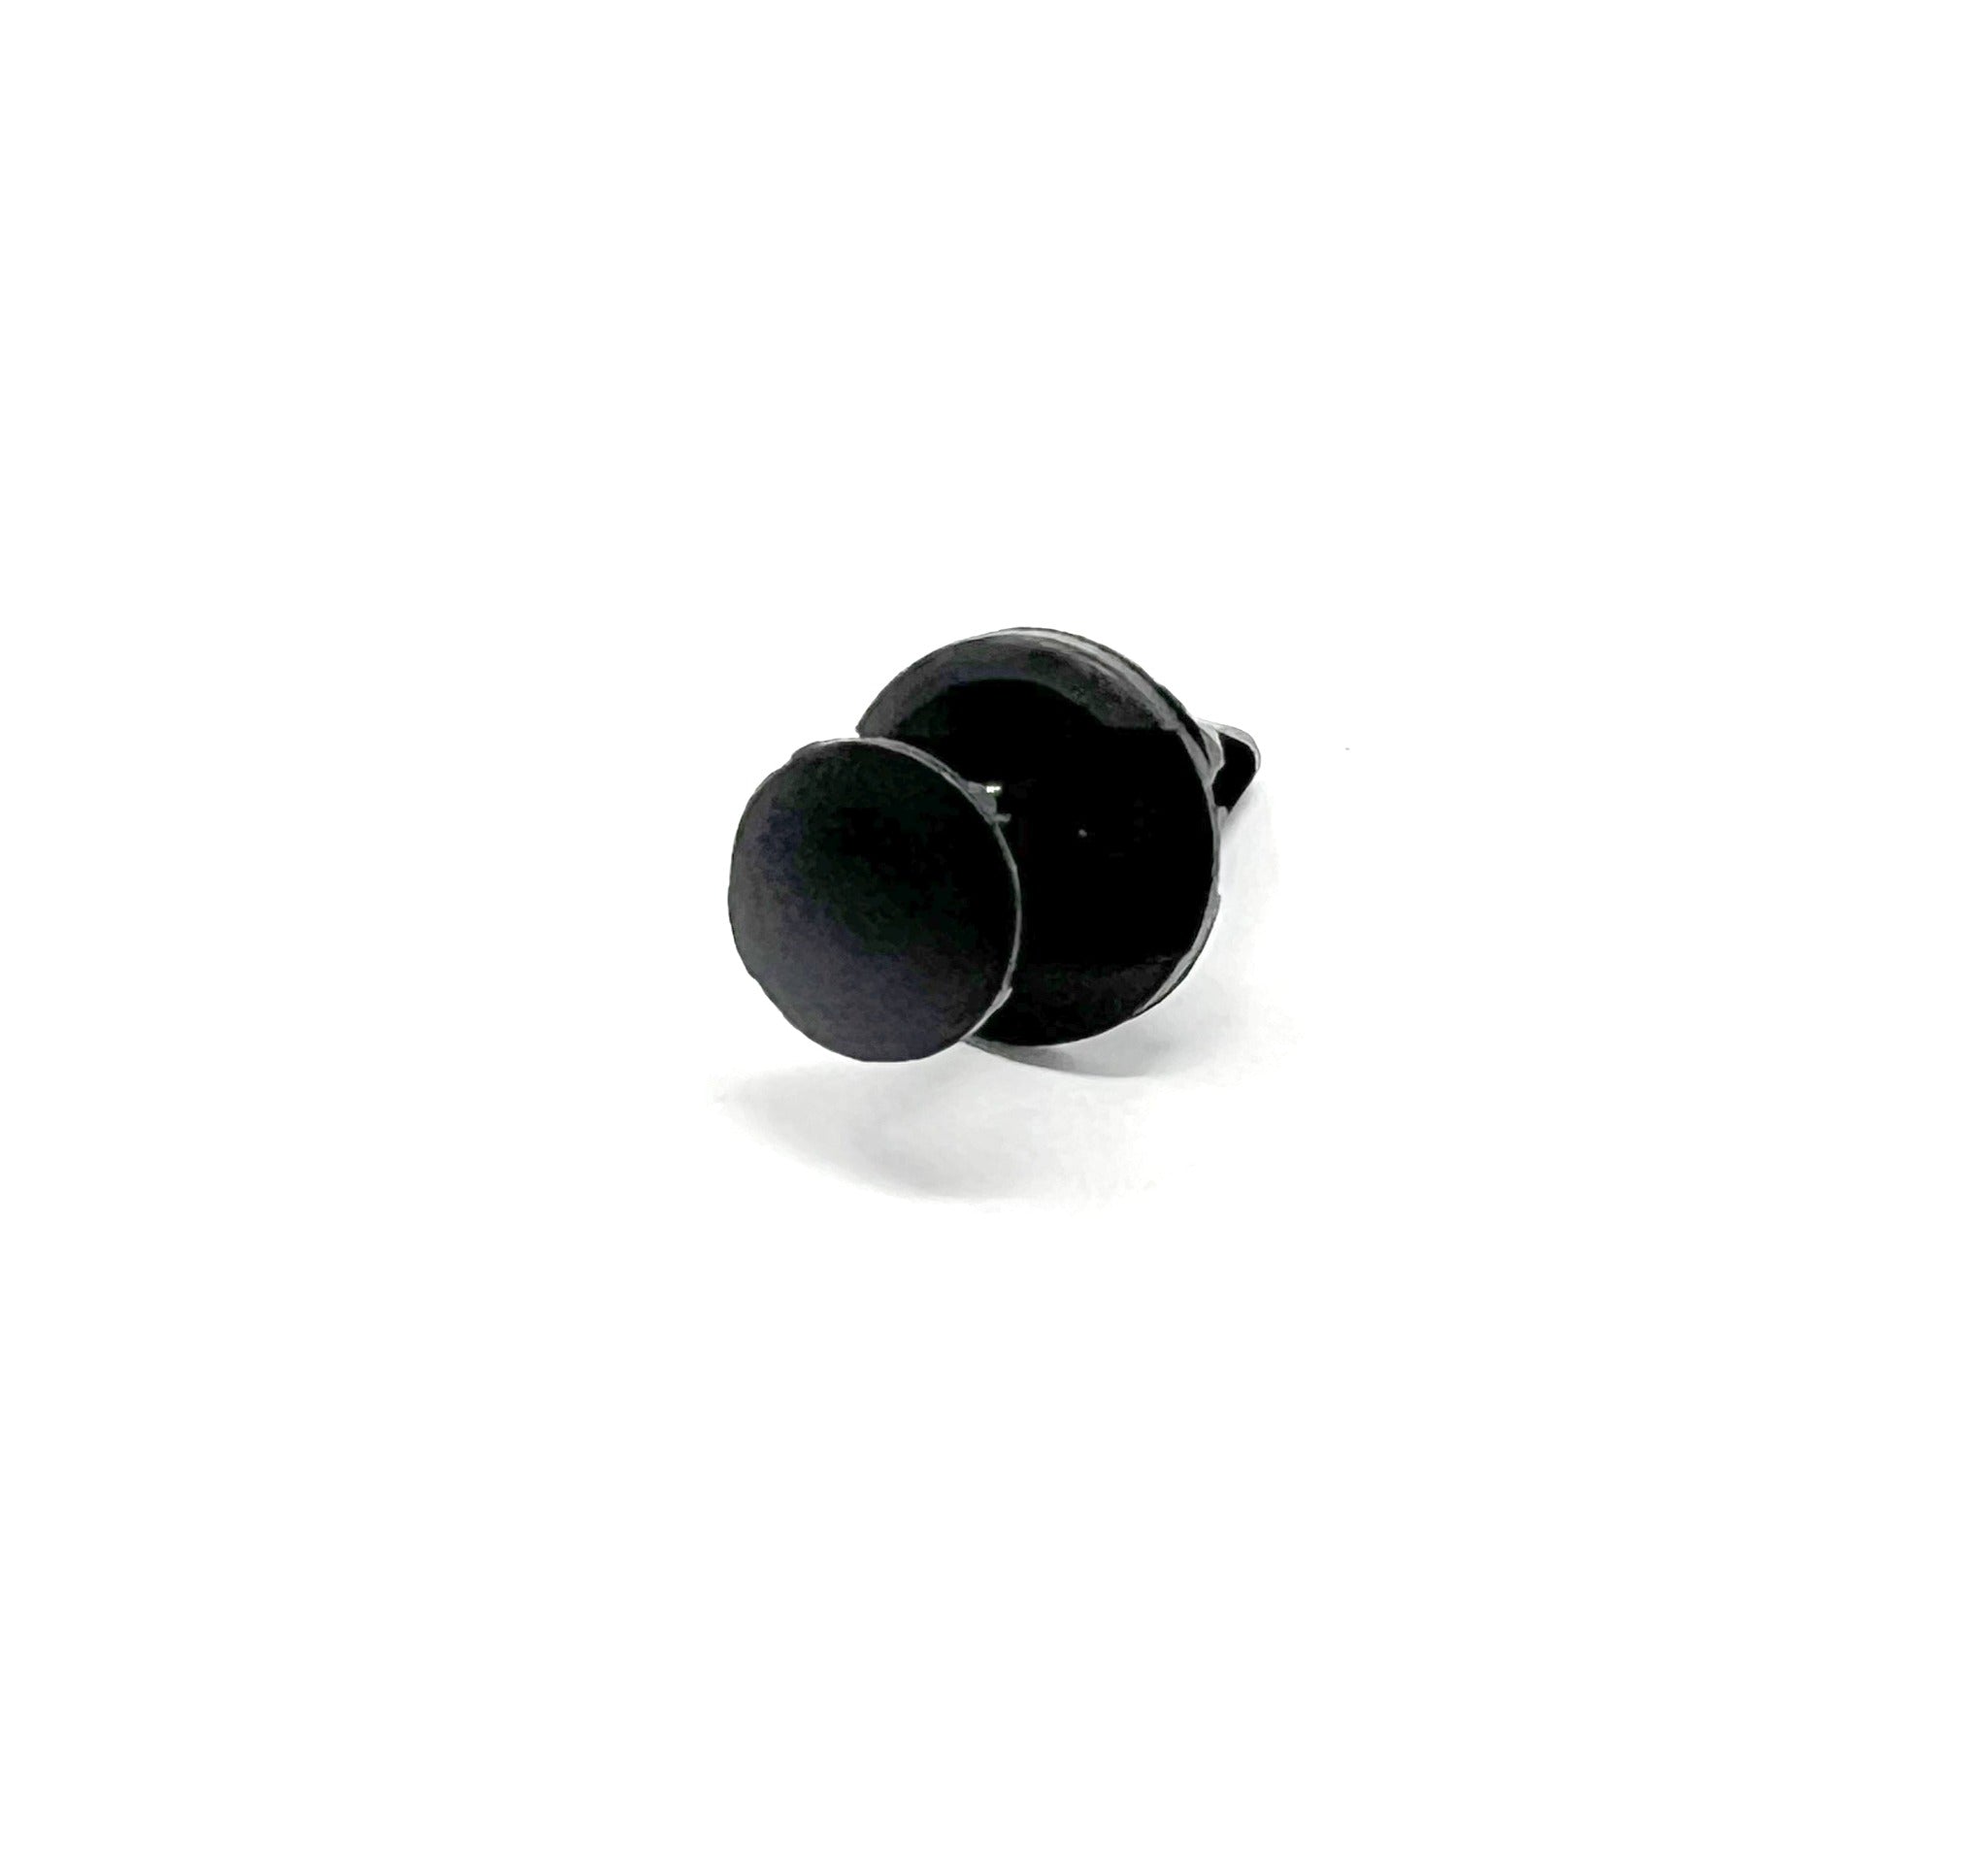 Black Nylon Wheel Opening Molding Push Type Retainer  Head Diameter 19/32", Stem Length 3/4", Fits Into 1/4" Hole GM #21077123 (25 pack)